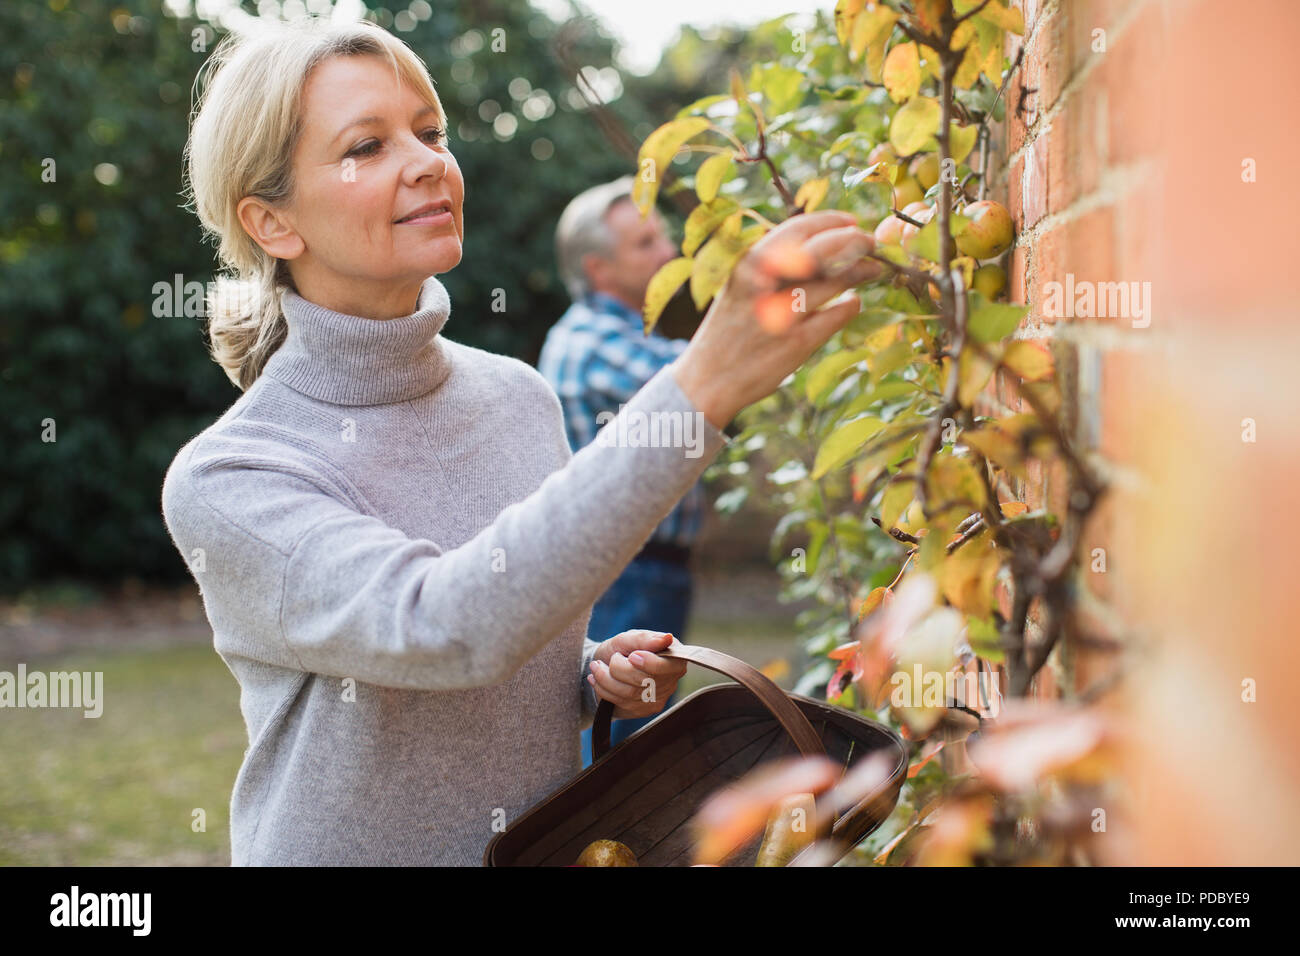 Mature woman harvesting apples in garden Stock Photo